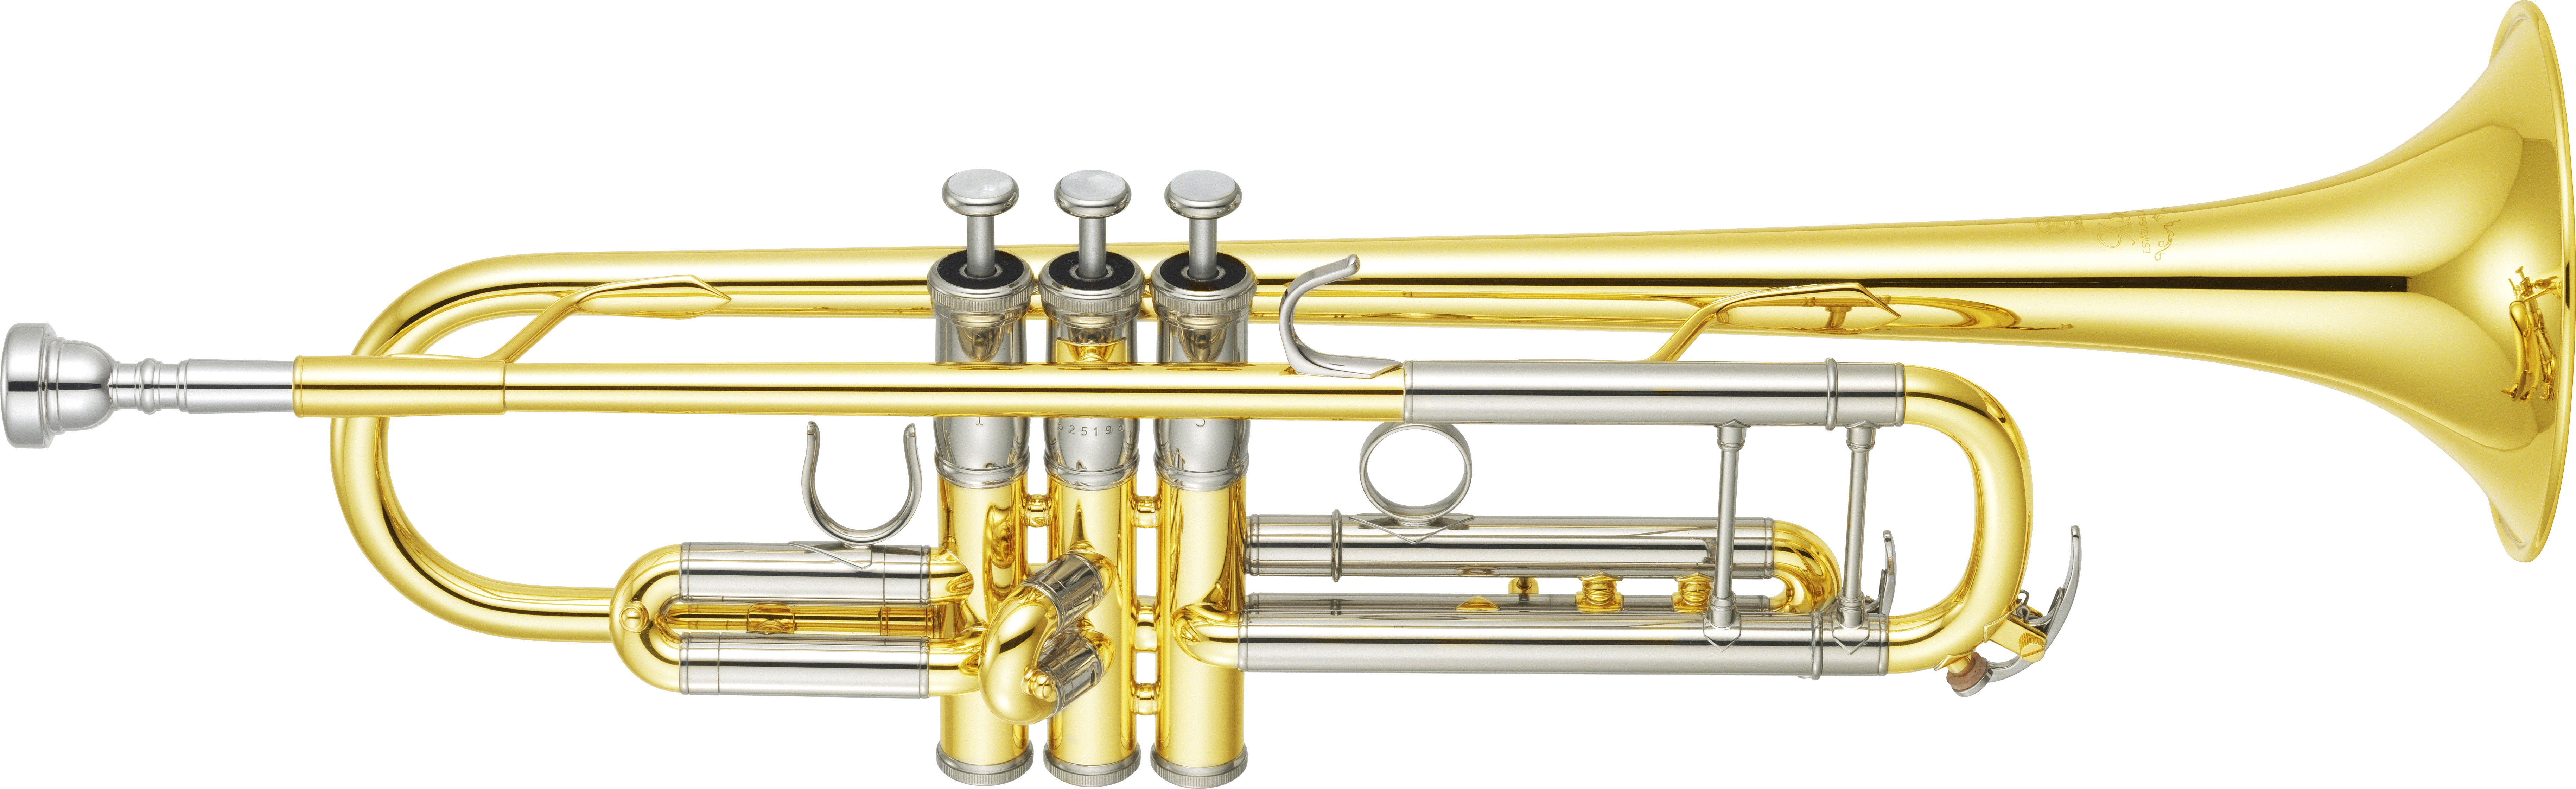 Yamaha Bb Trumpet - YTR 8345 04